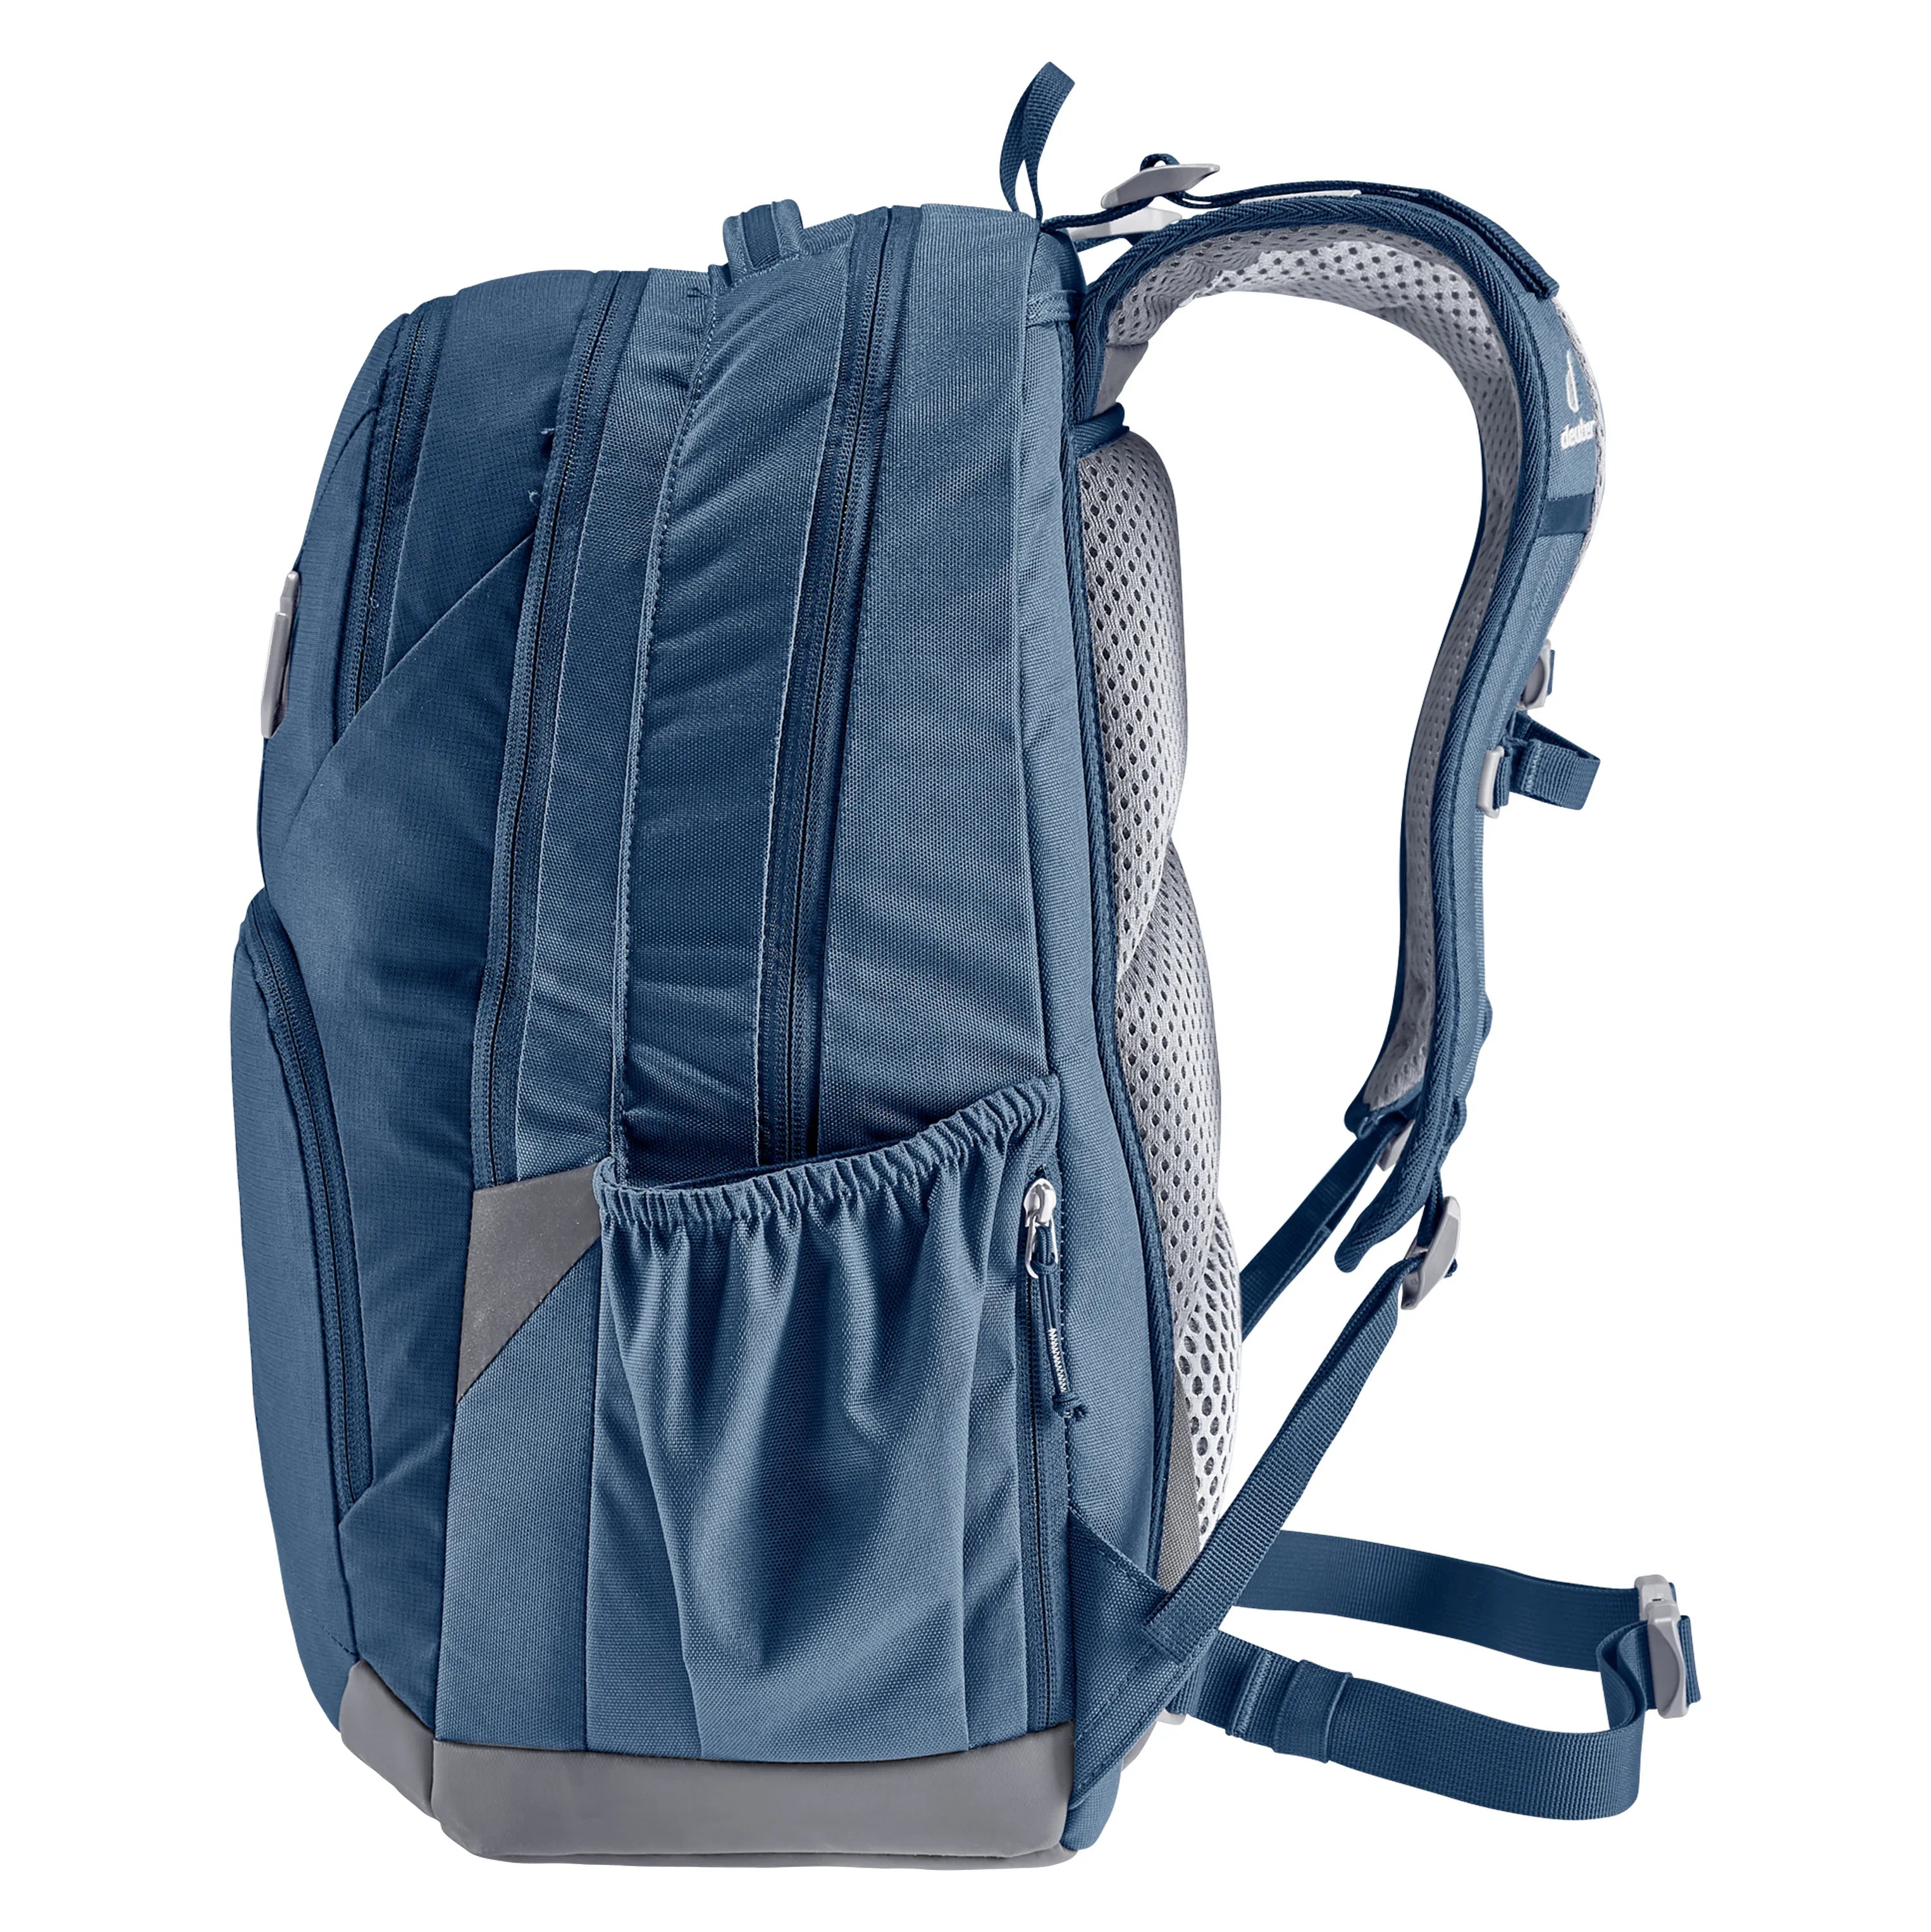 Deuter Daypack Cotogy school backpack 46 cm - Currant-Arctic